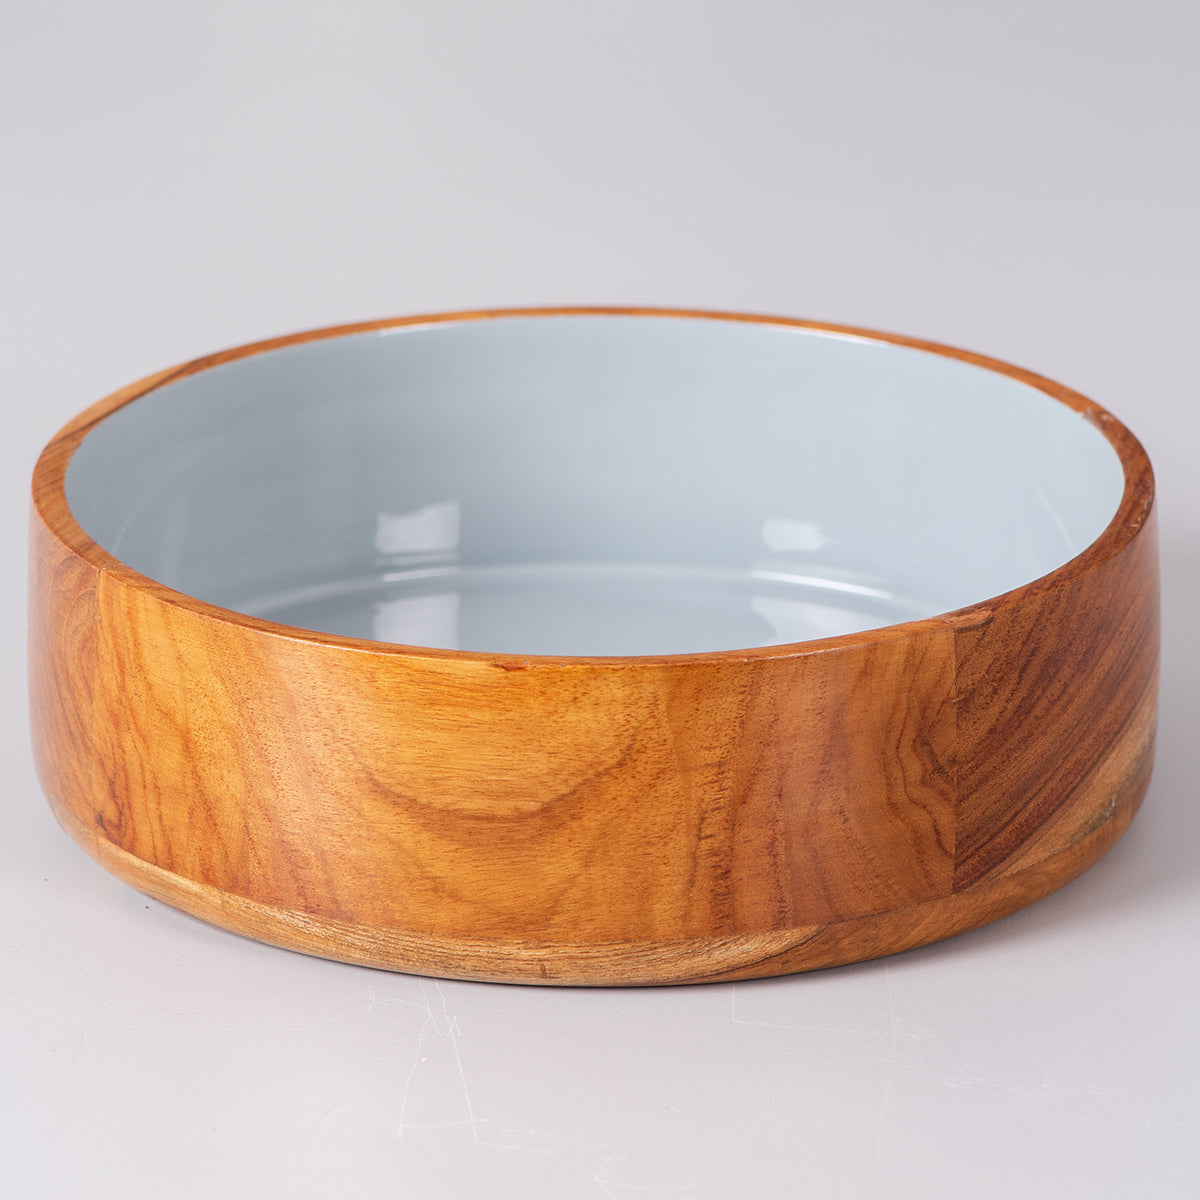 wood serving bowl